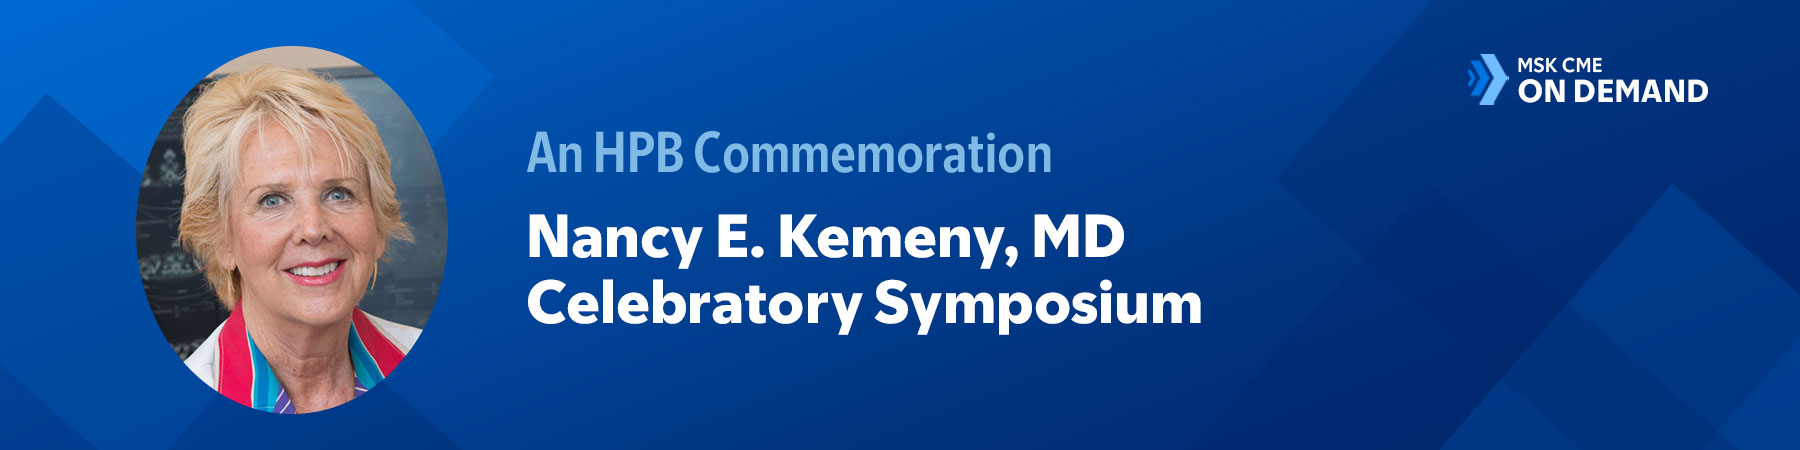 An HPB Commemoration: Nancy E. Kemeny, MD Celebratory Symposium — On Demand Banner